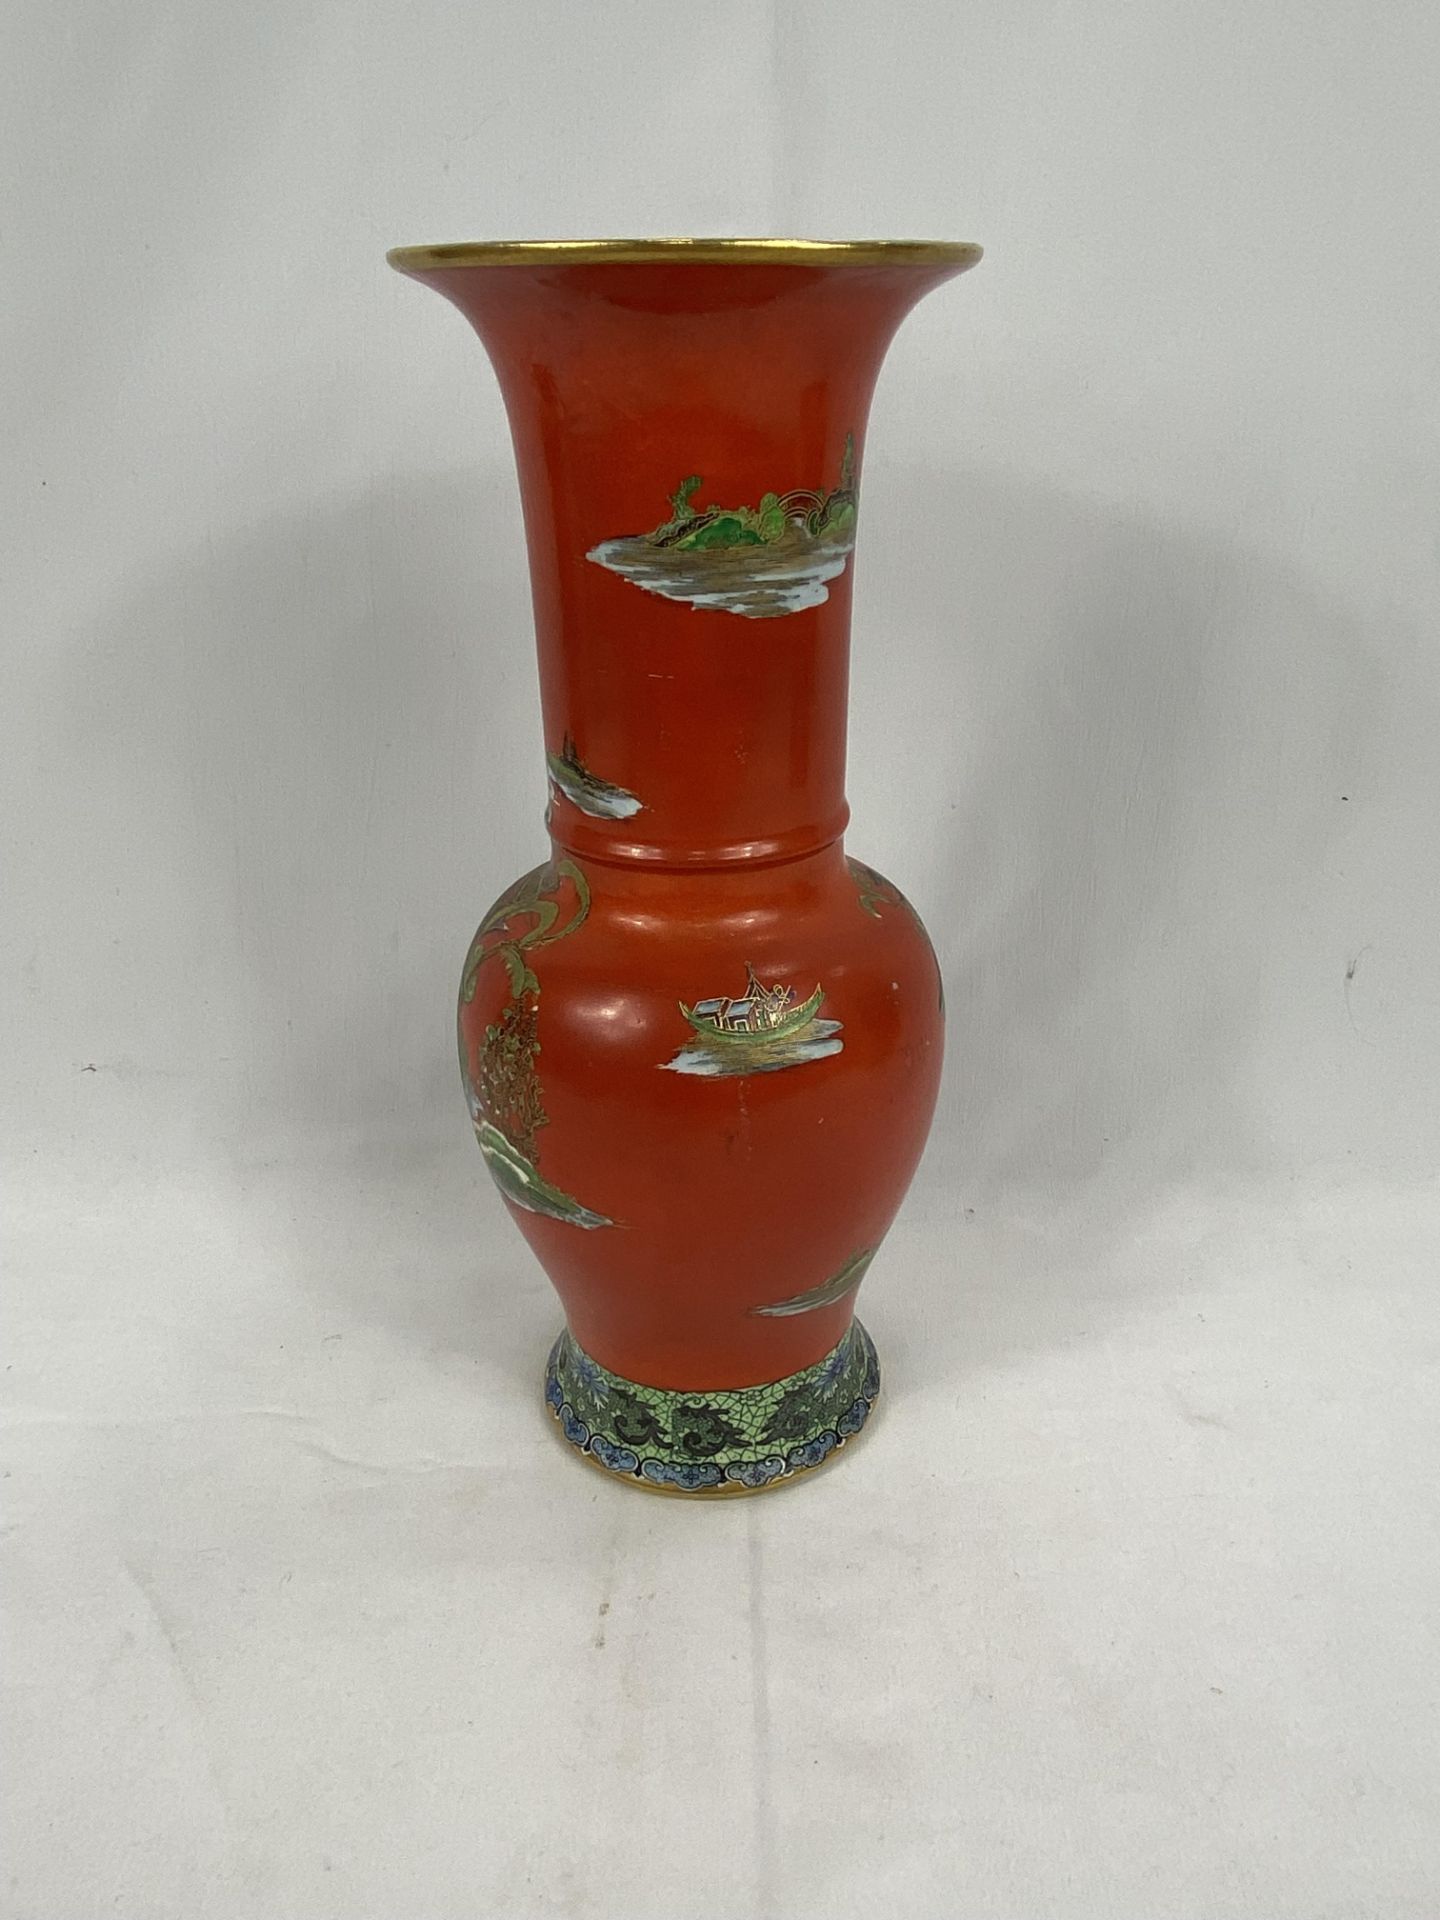 Carlton Ware vase